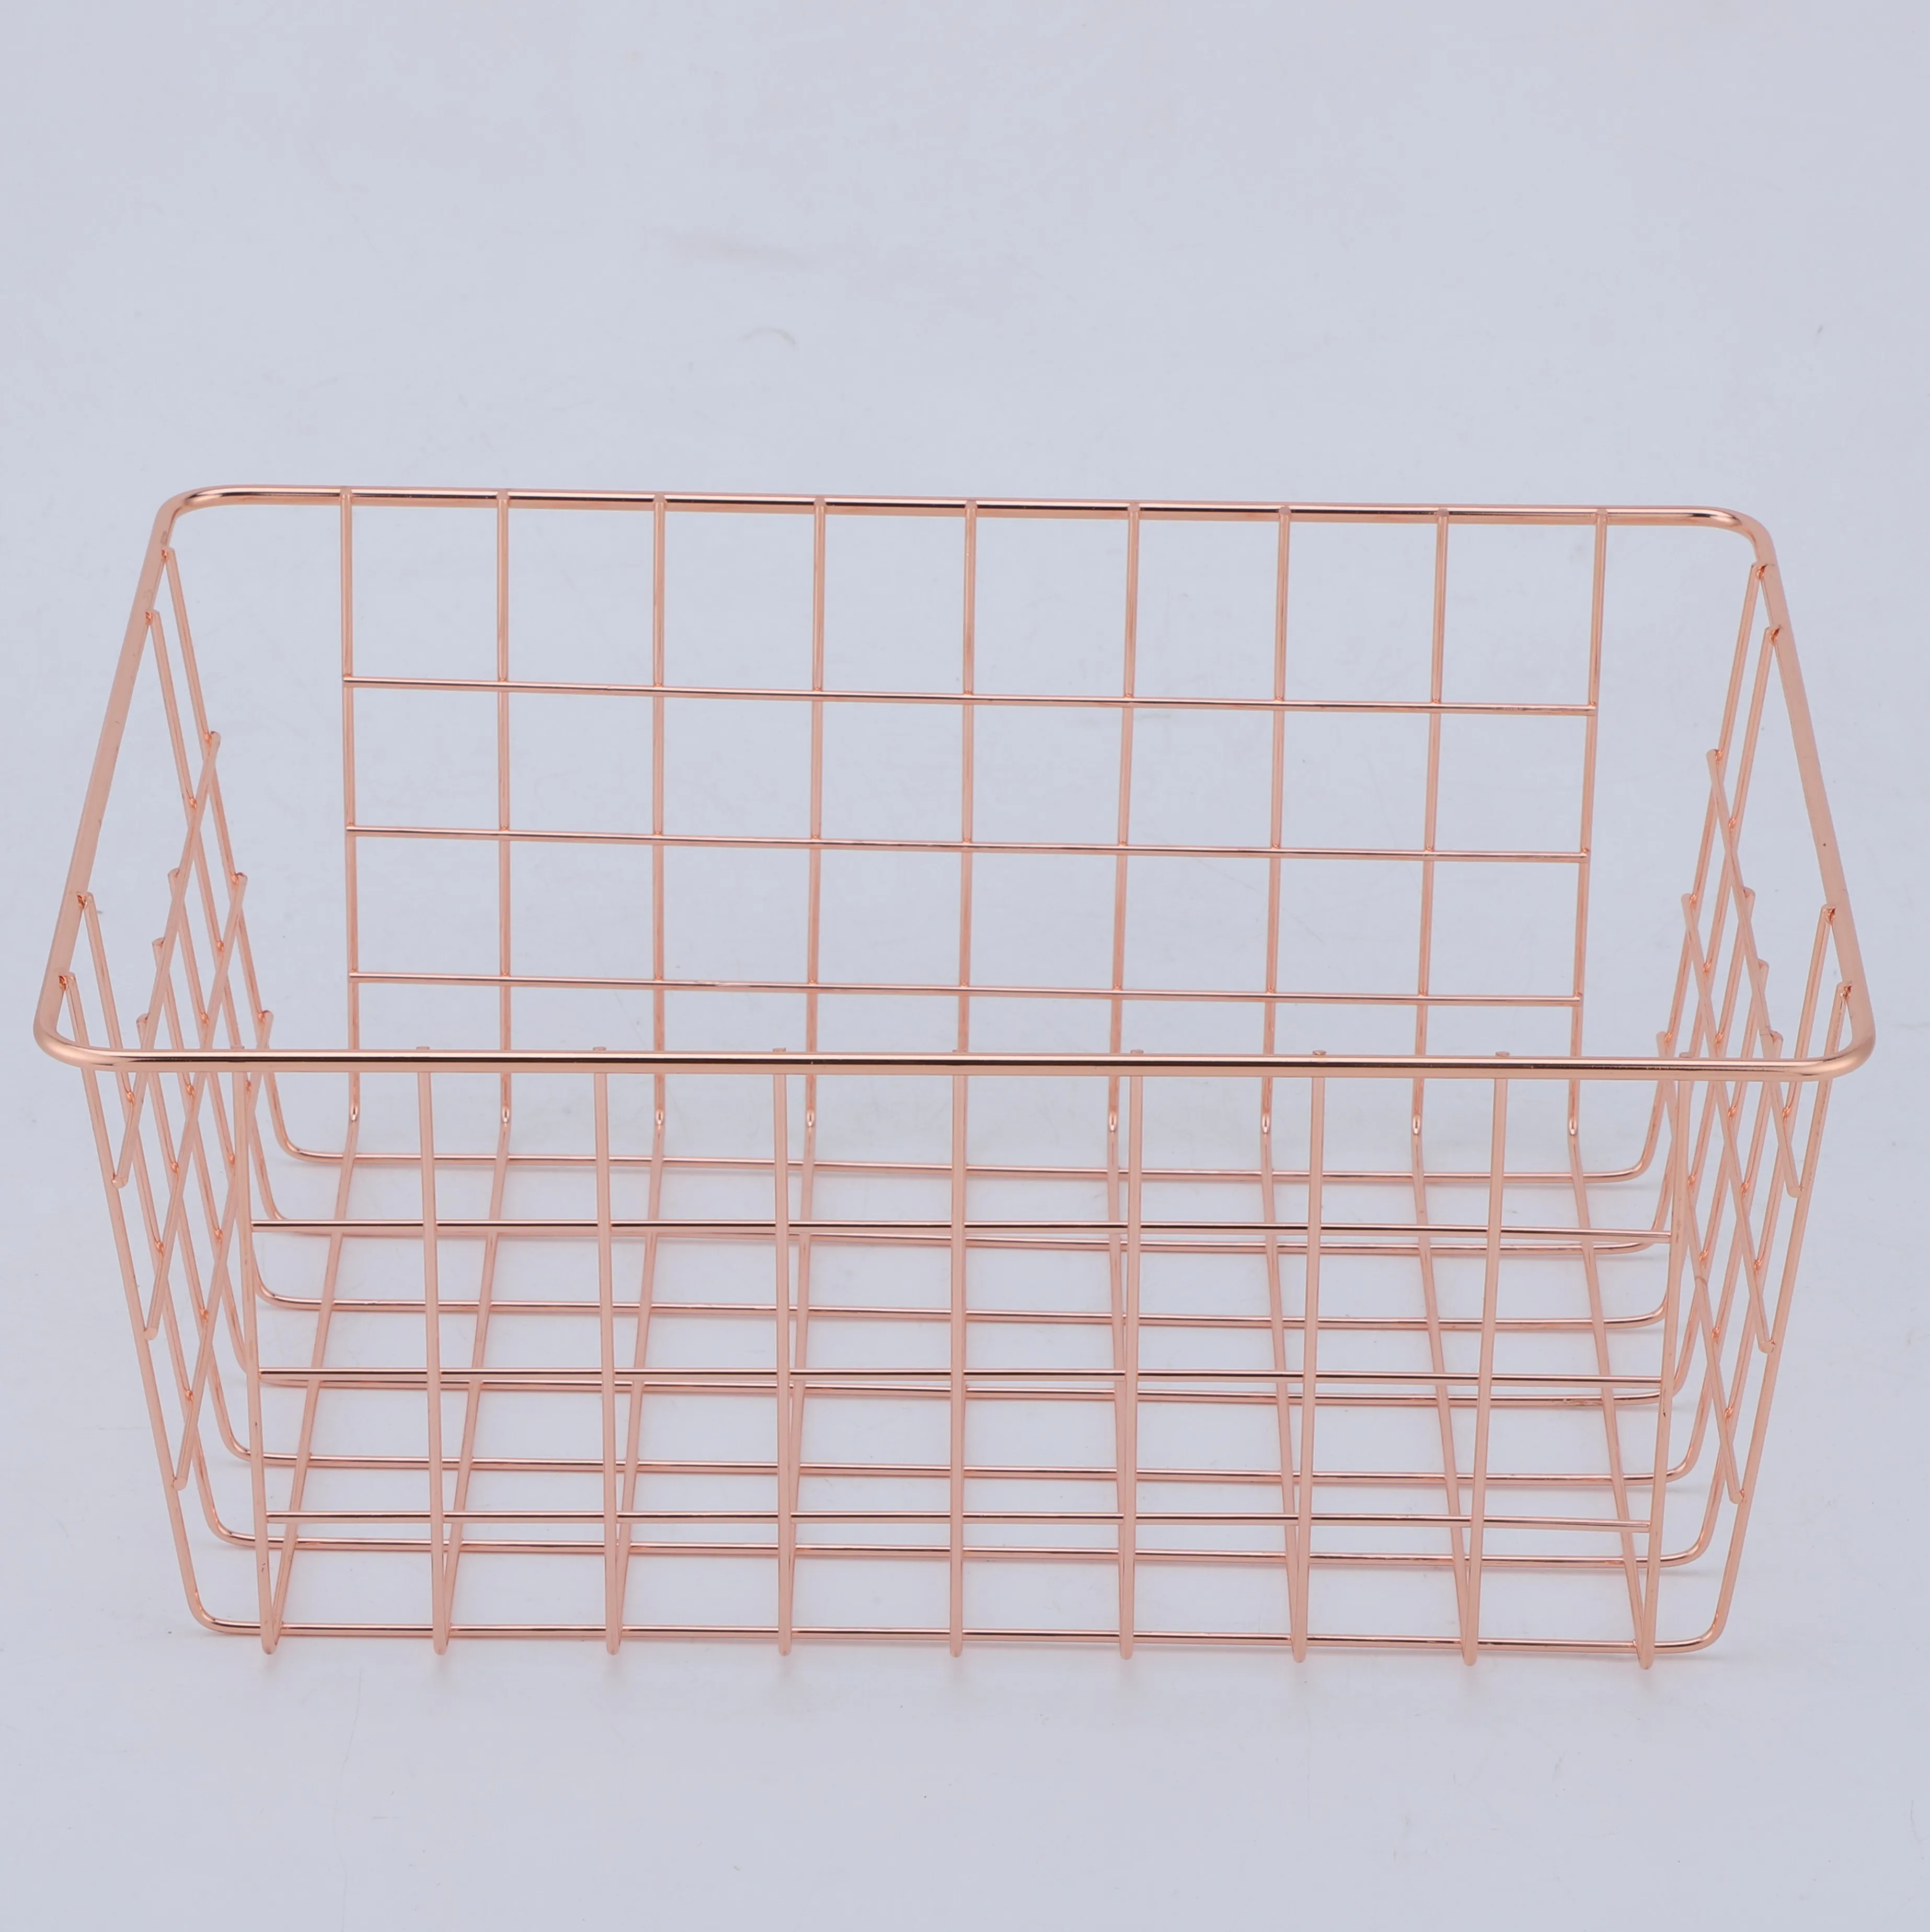 

Metal Iron Rose Gold Home Dacor Storage Basket For Kitchen Bedroom Bathroom Organizing